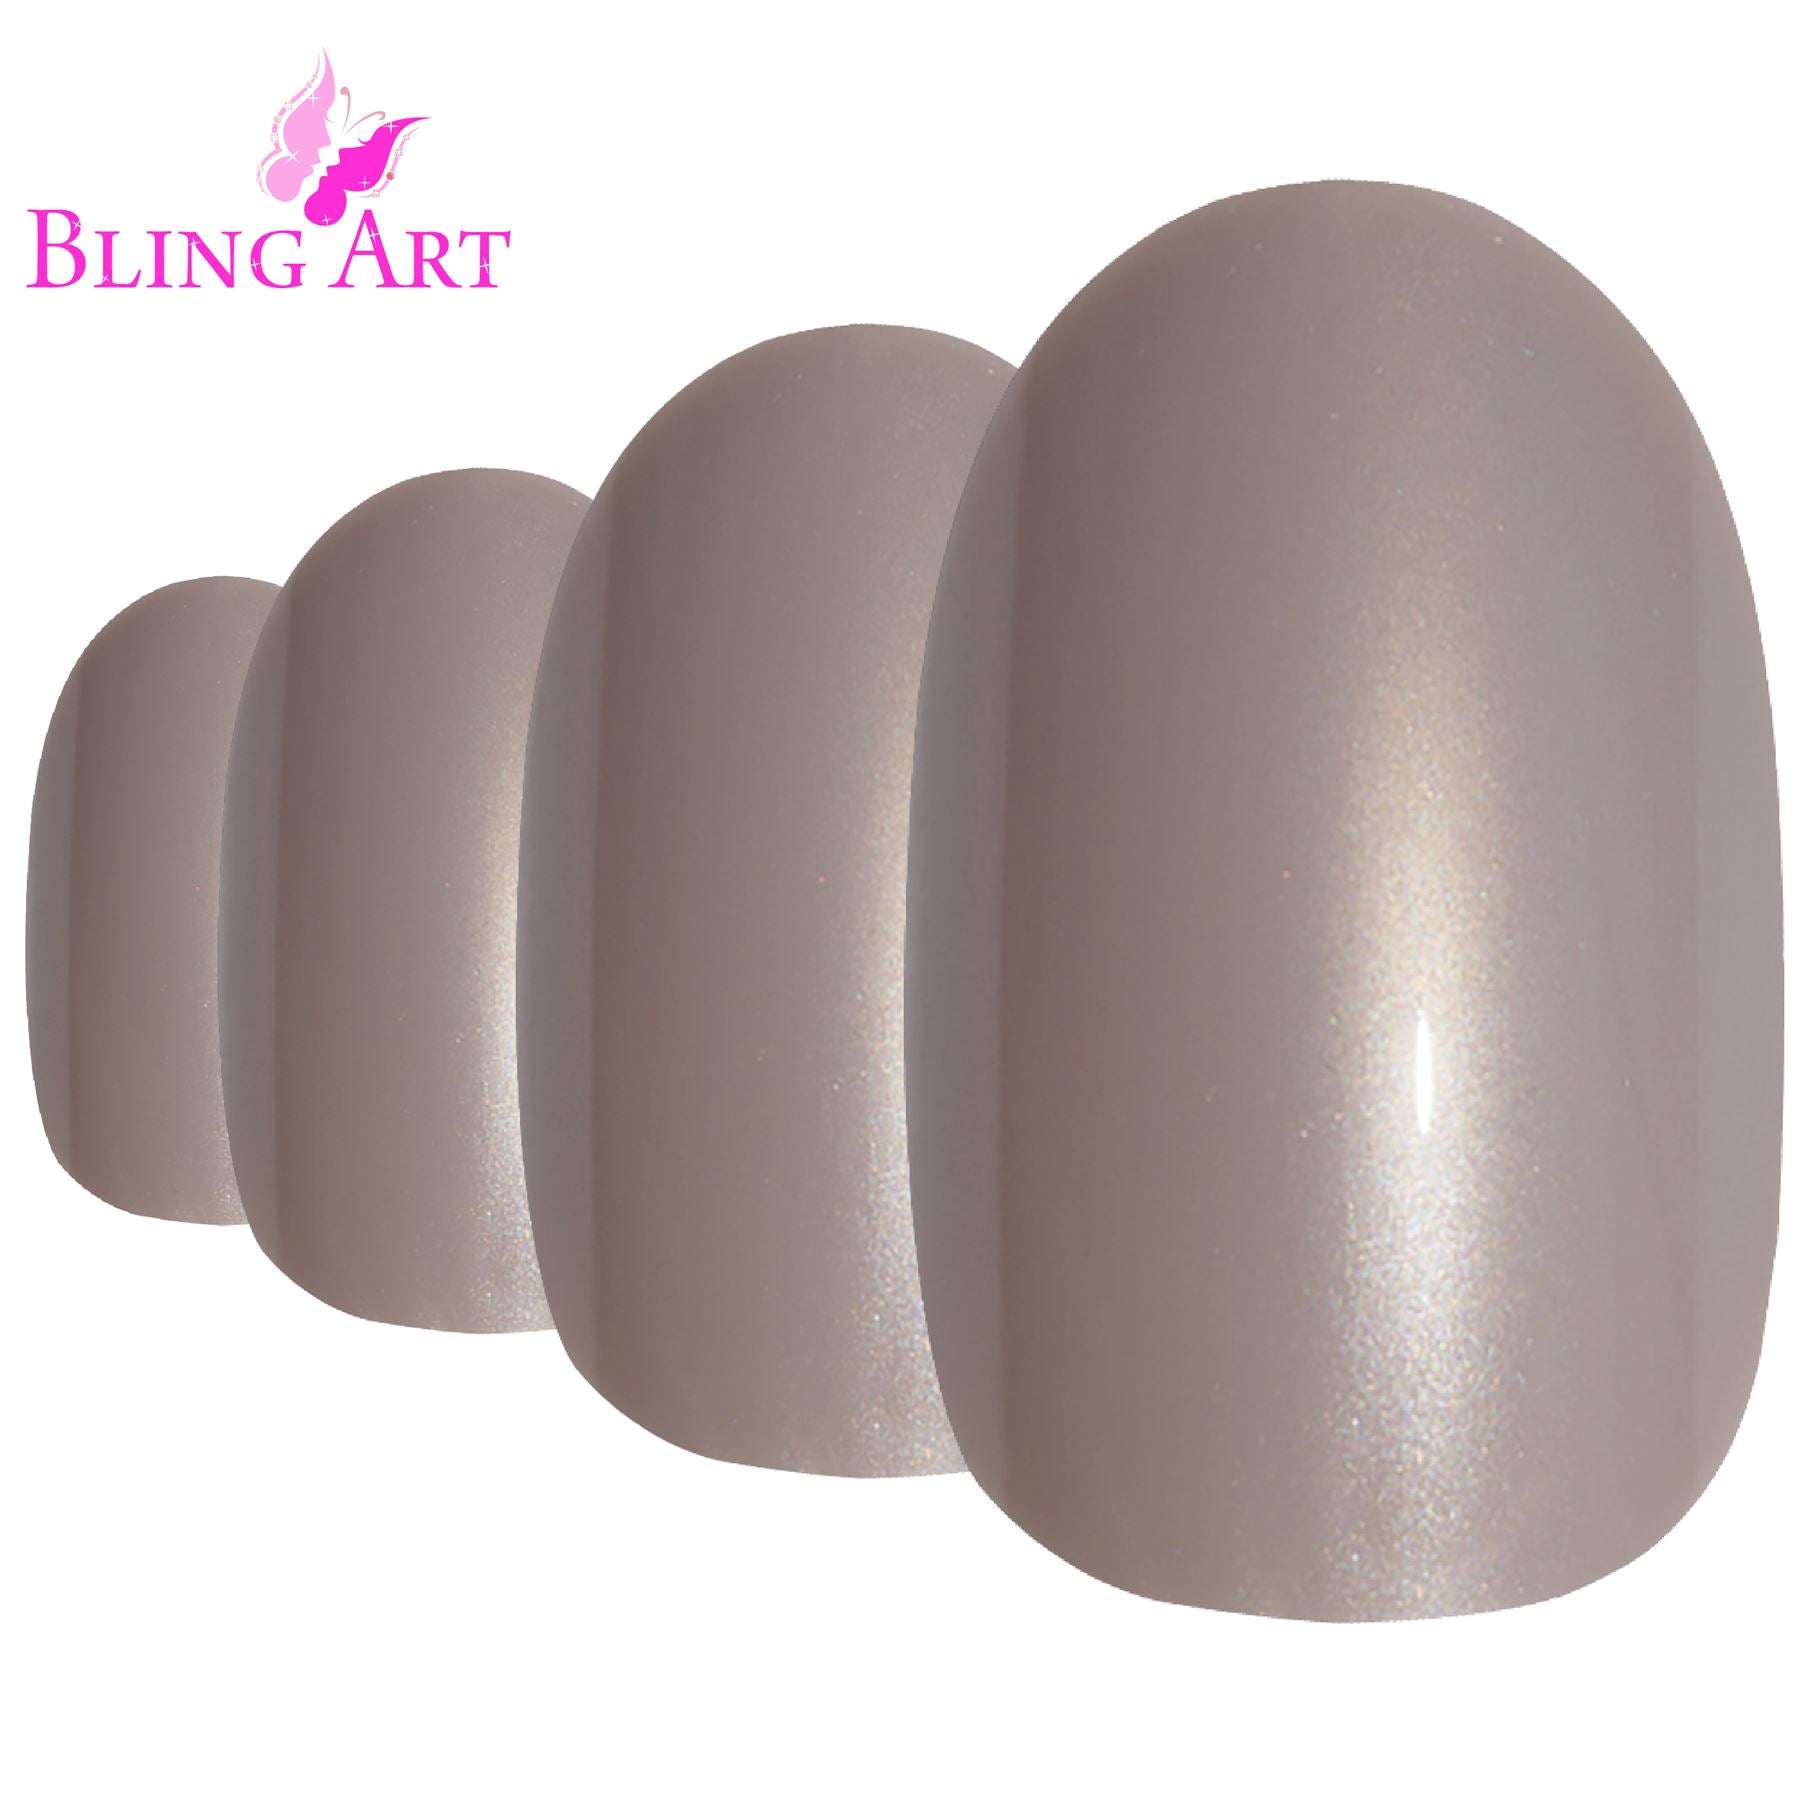 False Nails by Bling Art Beige Glitter Oval Medium Fake Acrylic 24 Tips with Glue